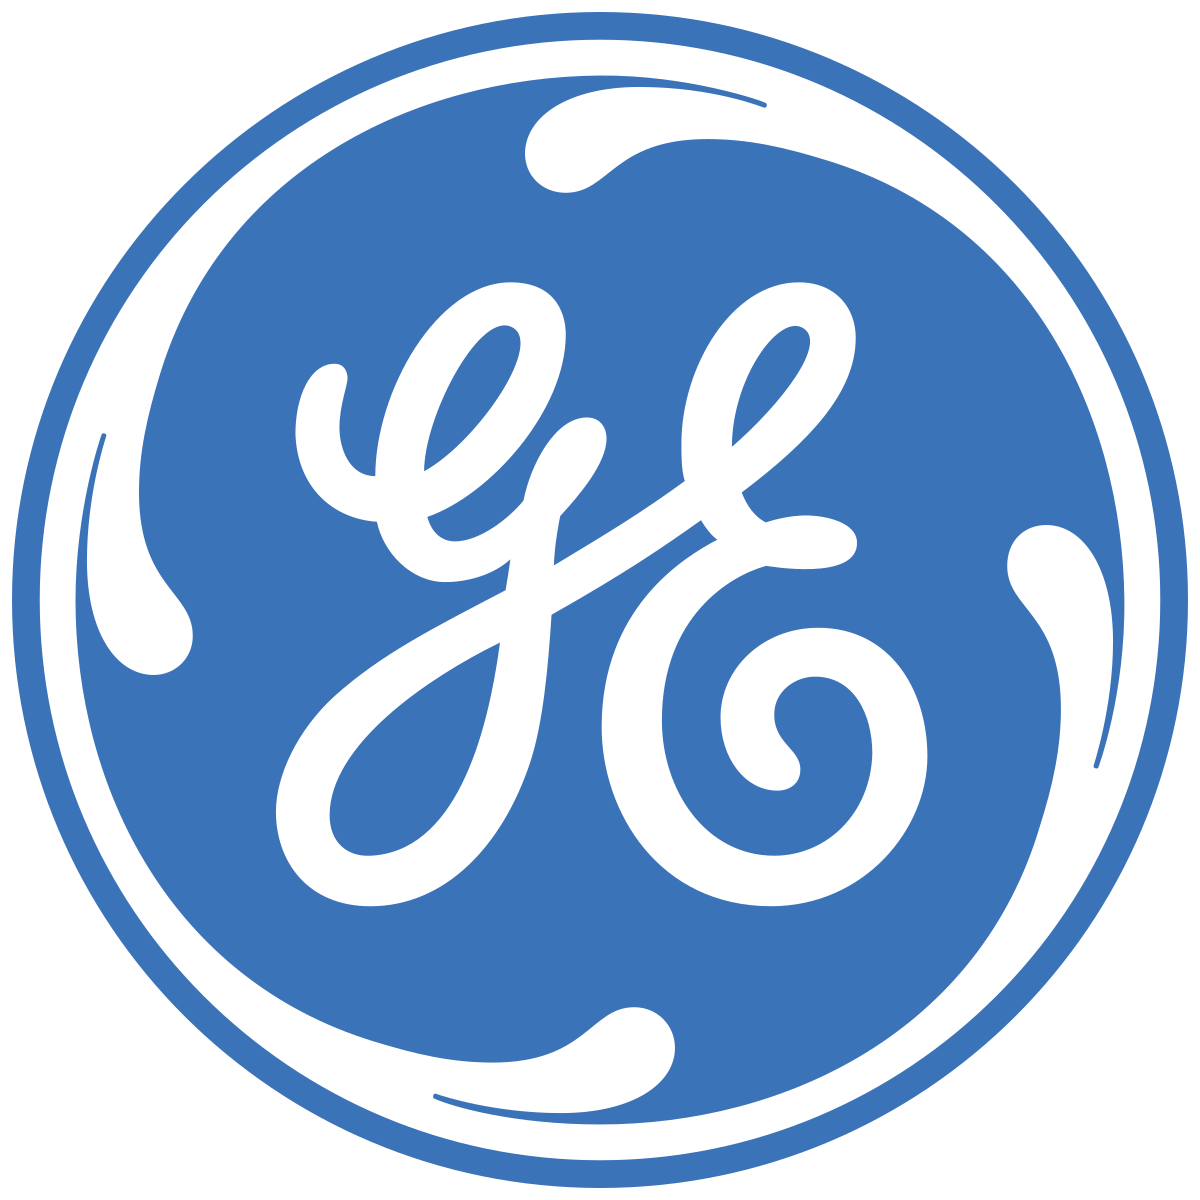 General Electric Brand Logo